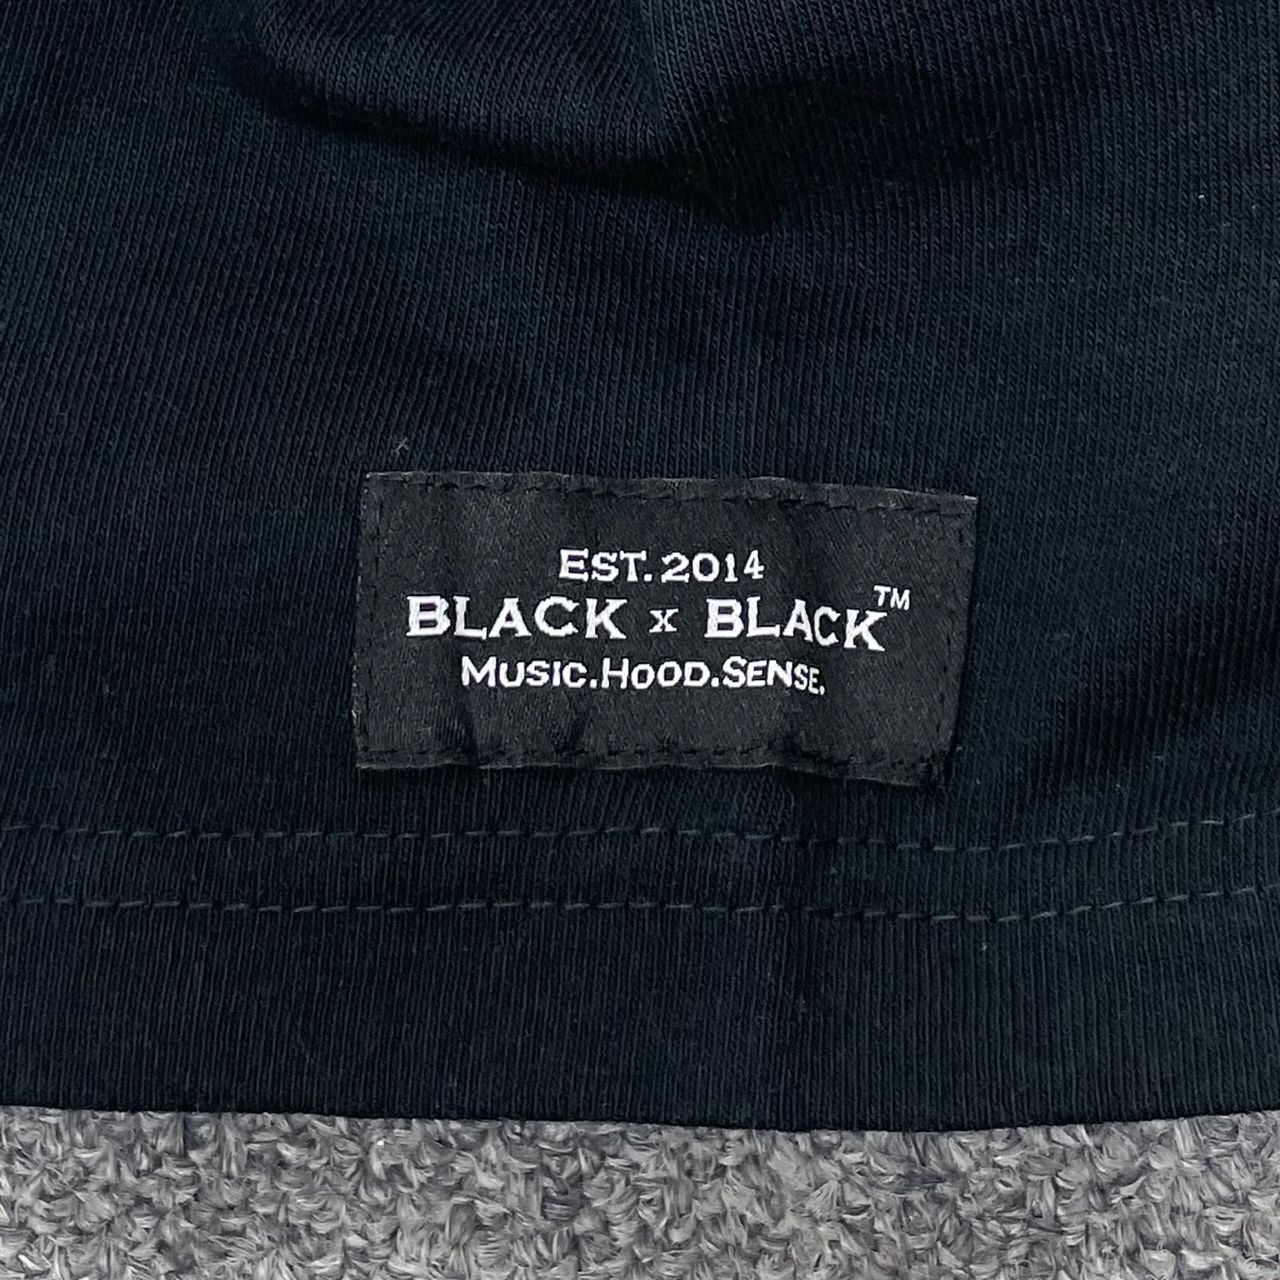 SAPEur BLACK×BLACK VENISGATE TEE コラボ プリント Tシャツ サプール